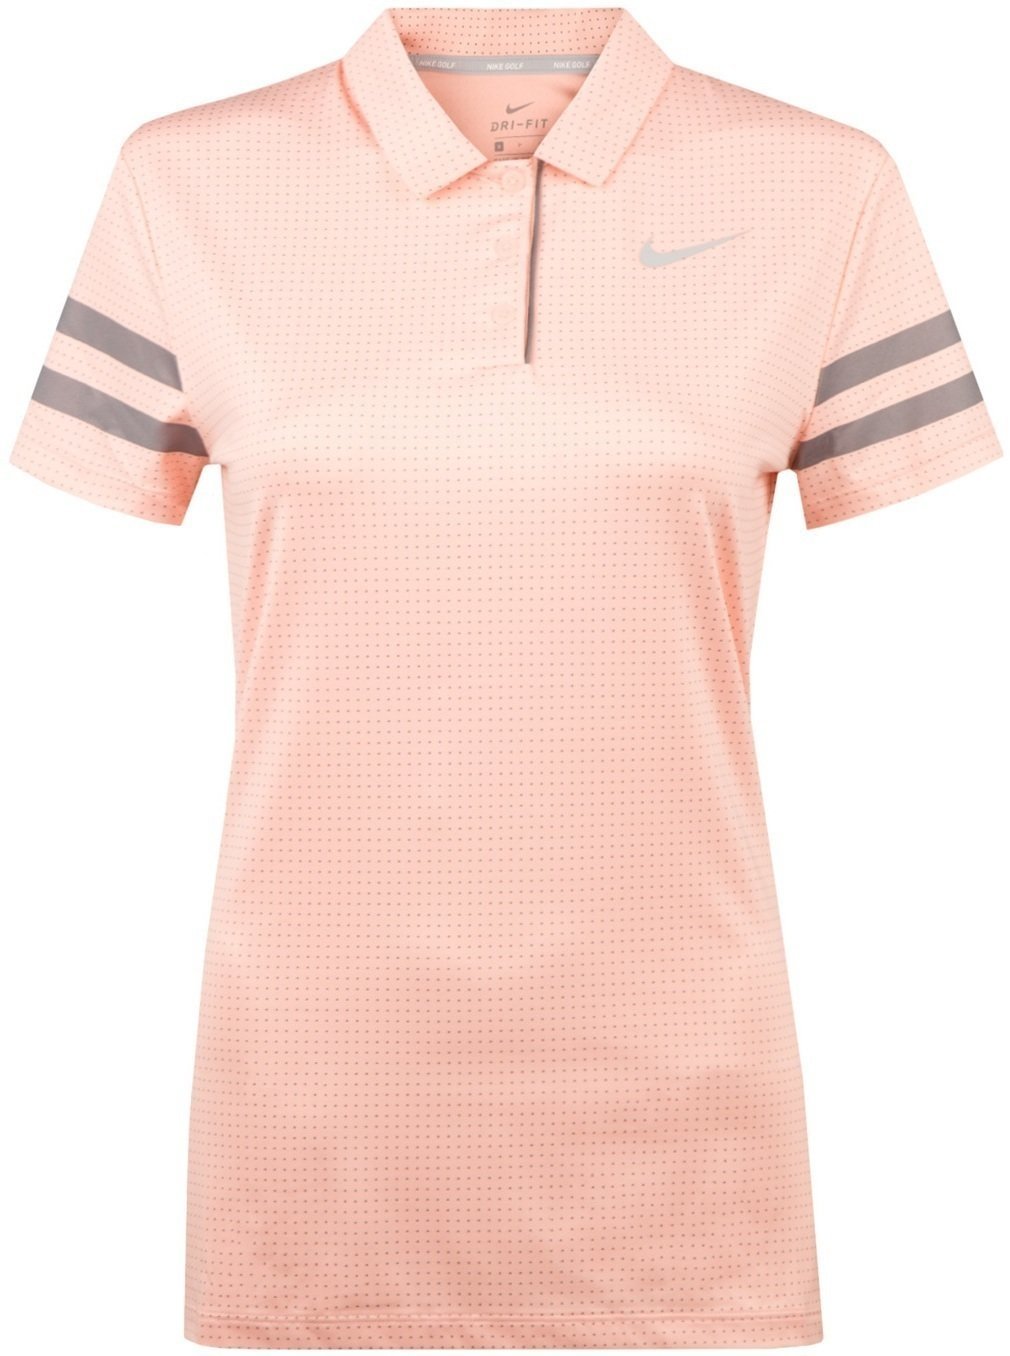 Polo Shirt Nike Dri-Fit Printed Womens Polo Shirt Storm Pink/Anthracite/White XS